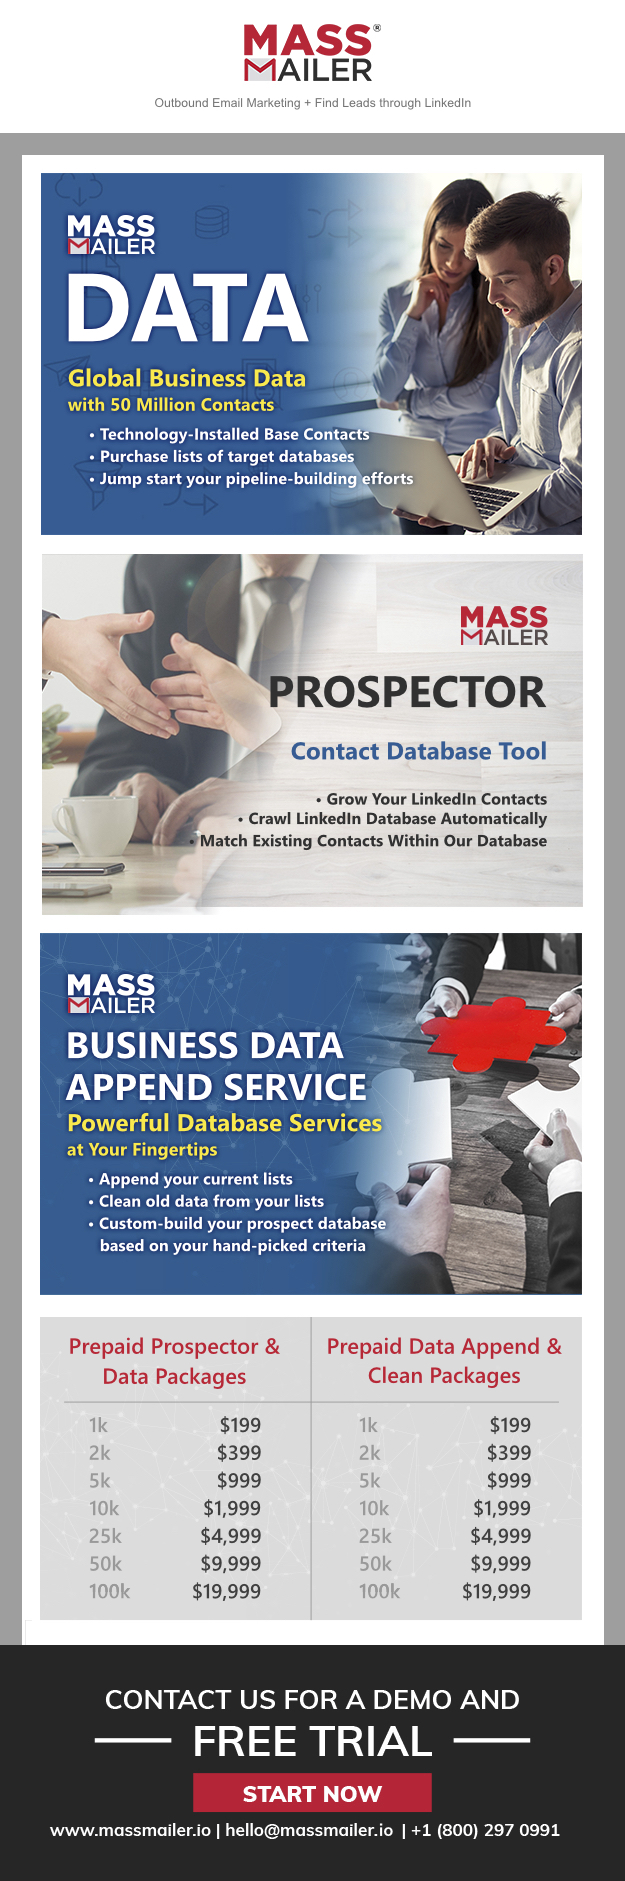 MassMailer B2B Contact Database & Prospecting Platform + Data Append Services